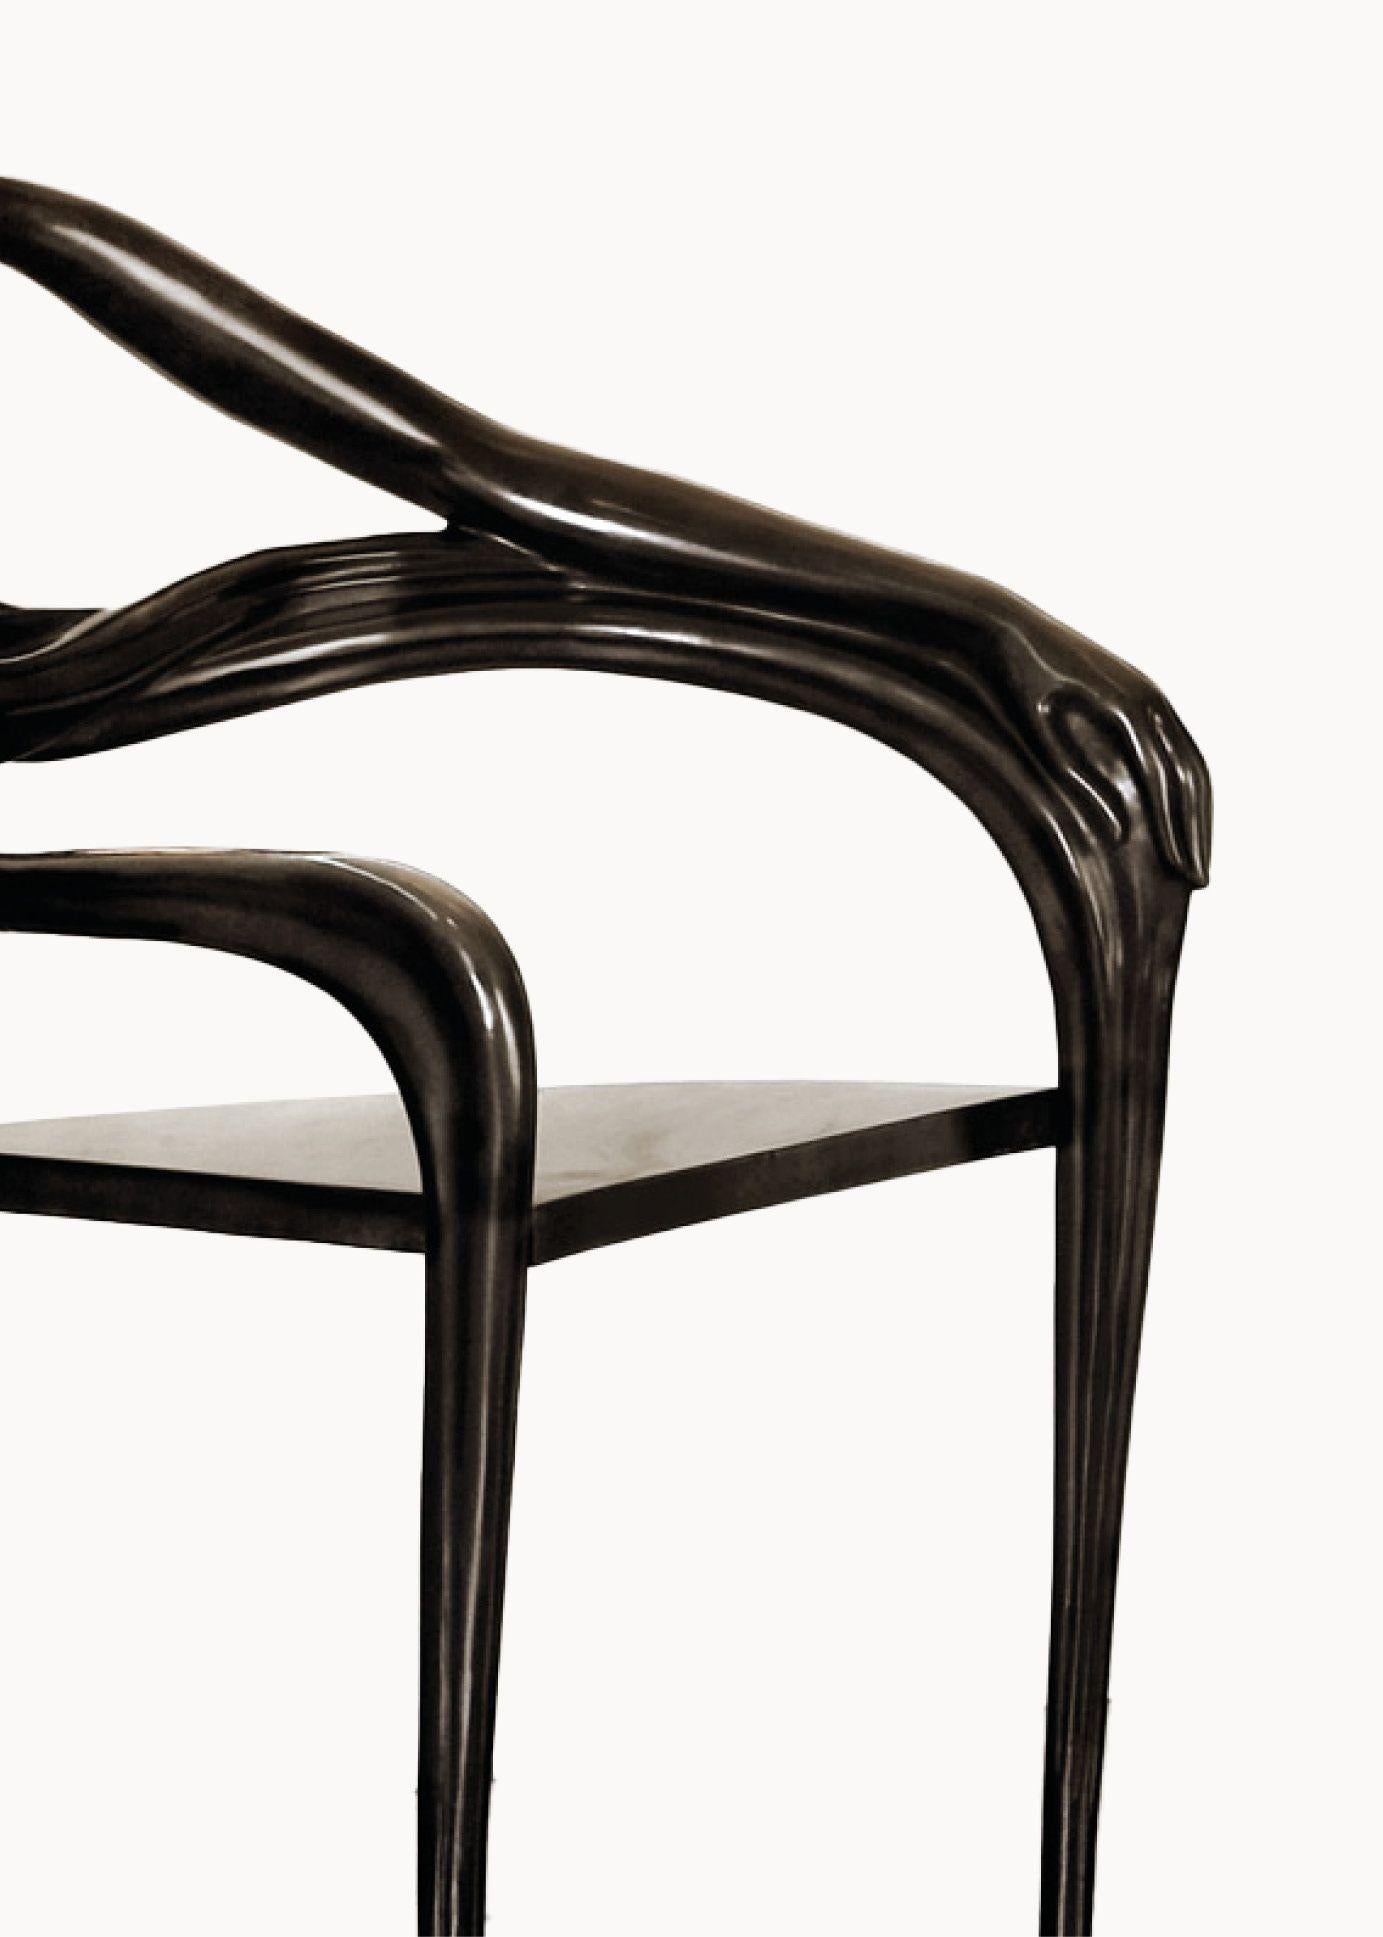 Spanish Salvador Dali Surrealist Leda Armchair Sculpture Black Label Limited Edition For Sale